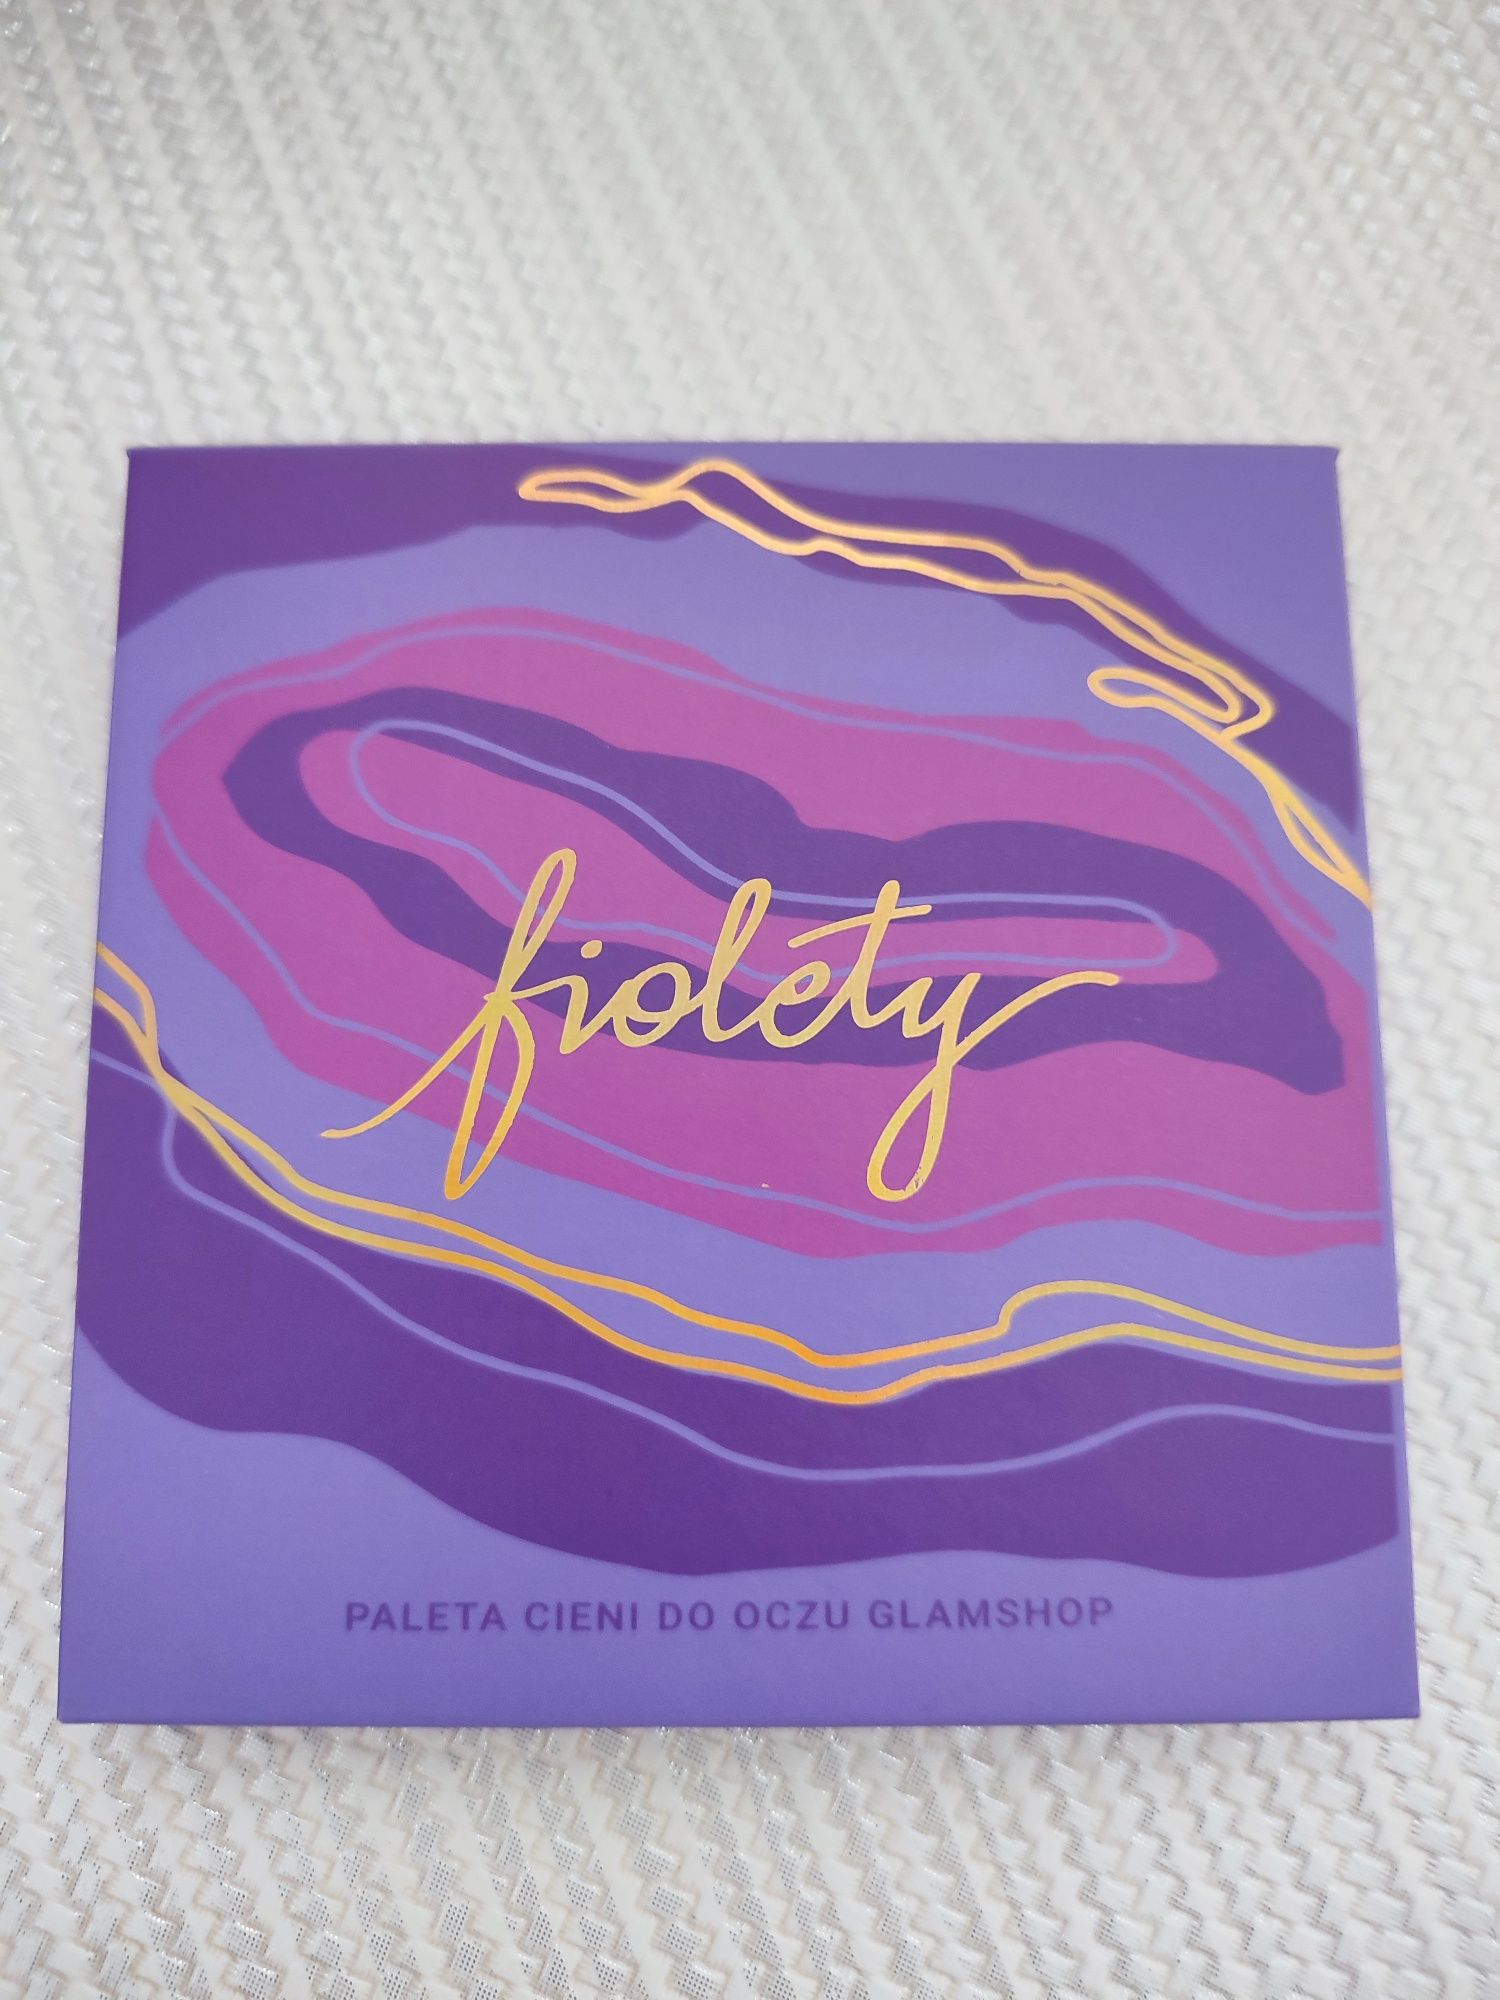 Glamshop Fiolety paleta cieni